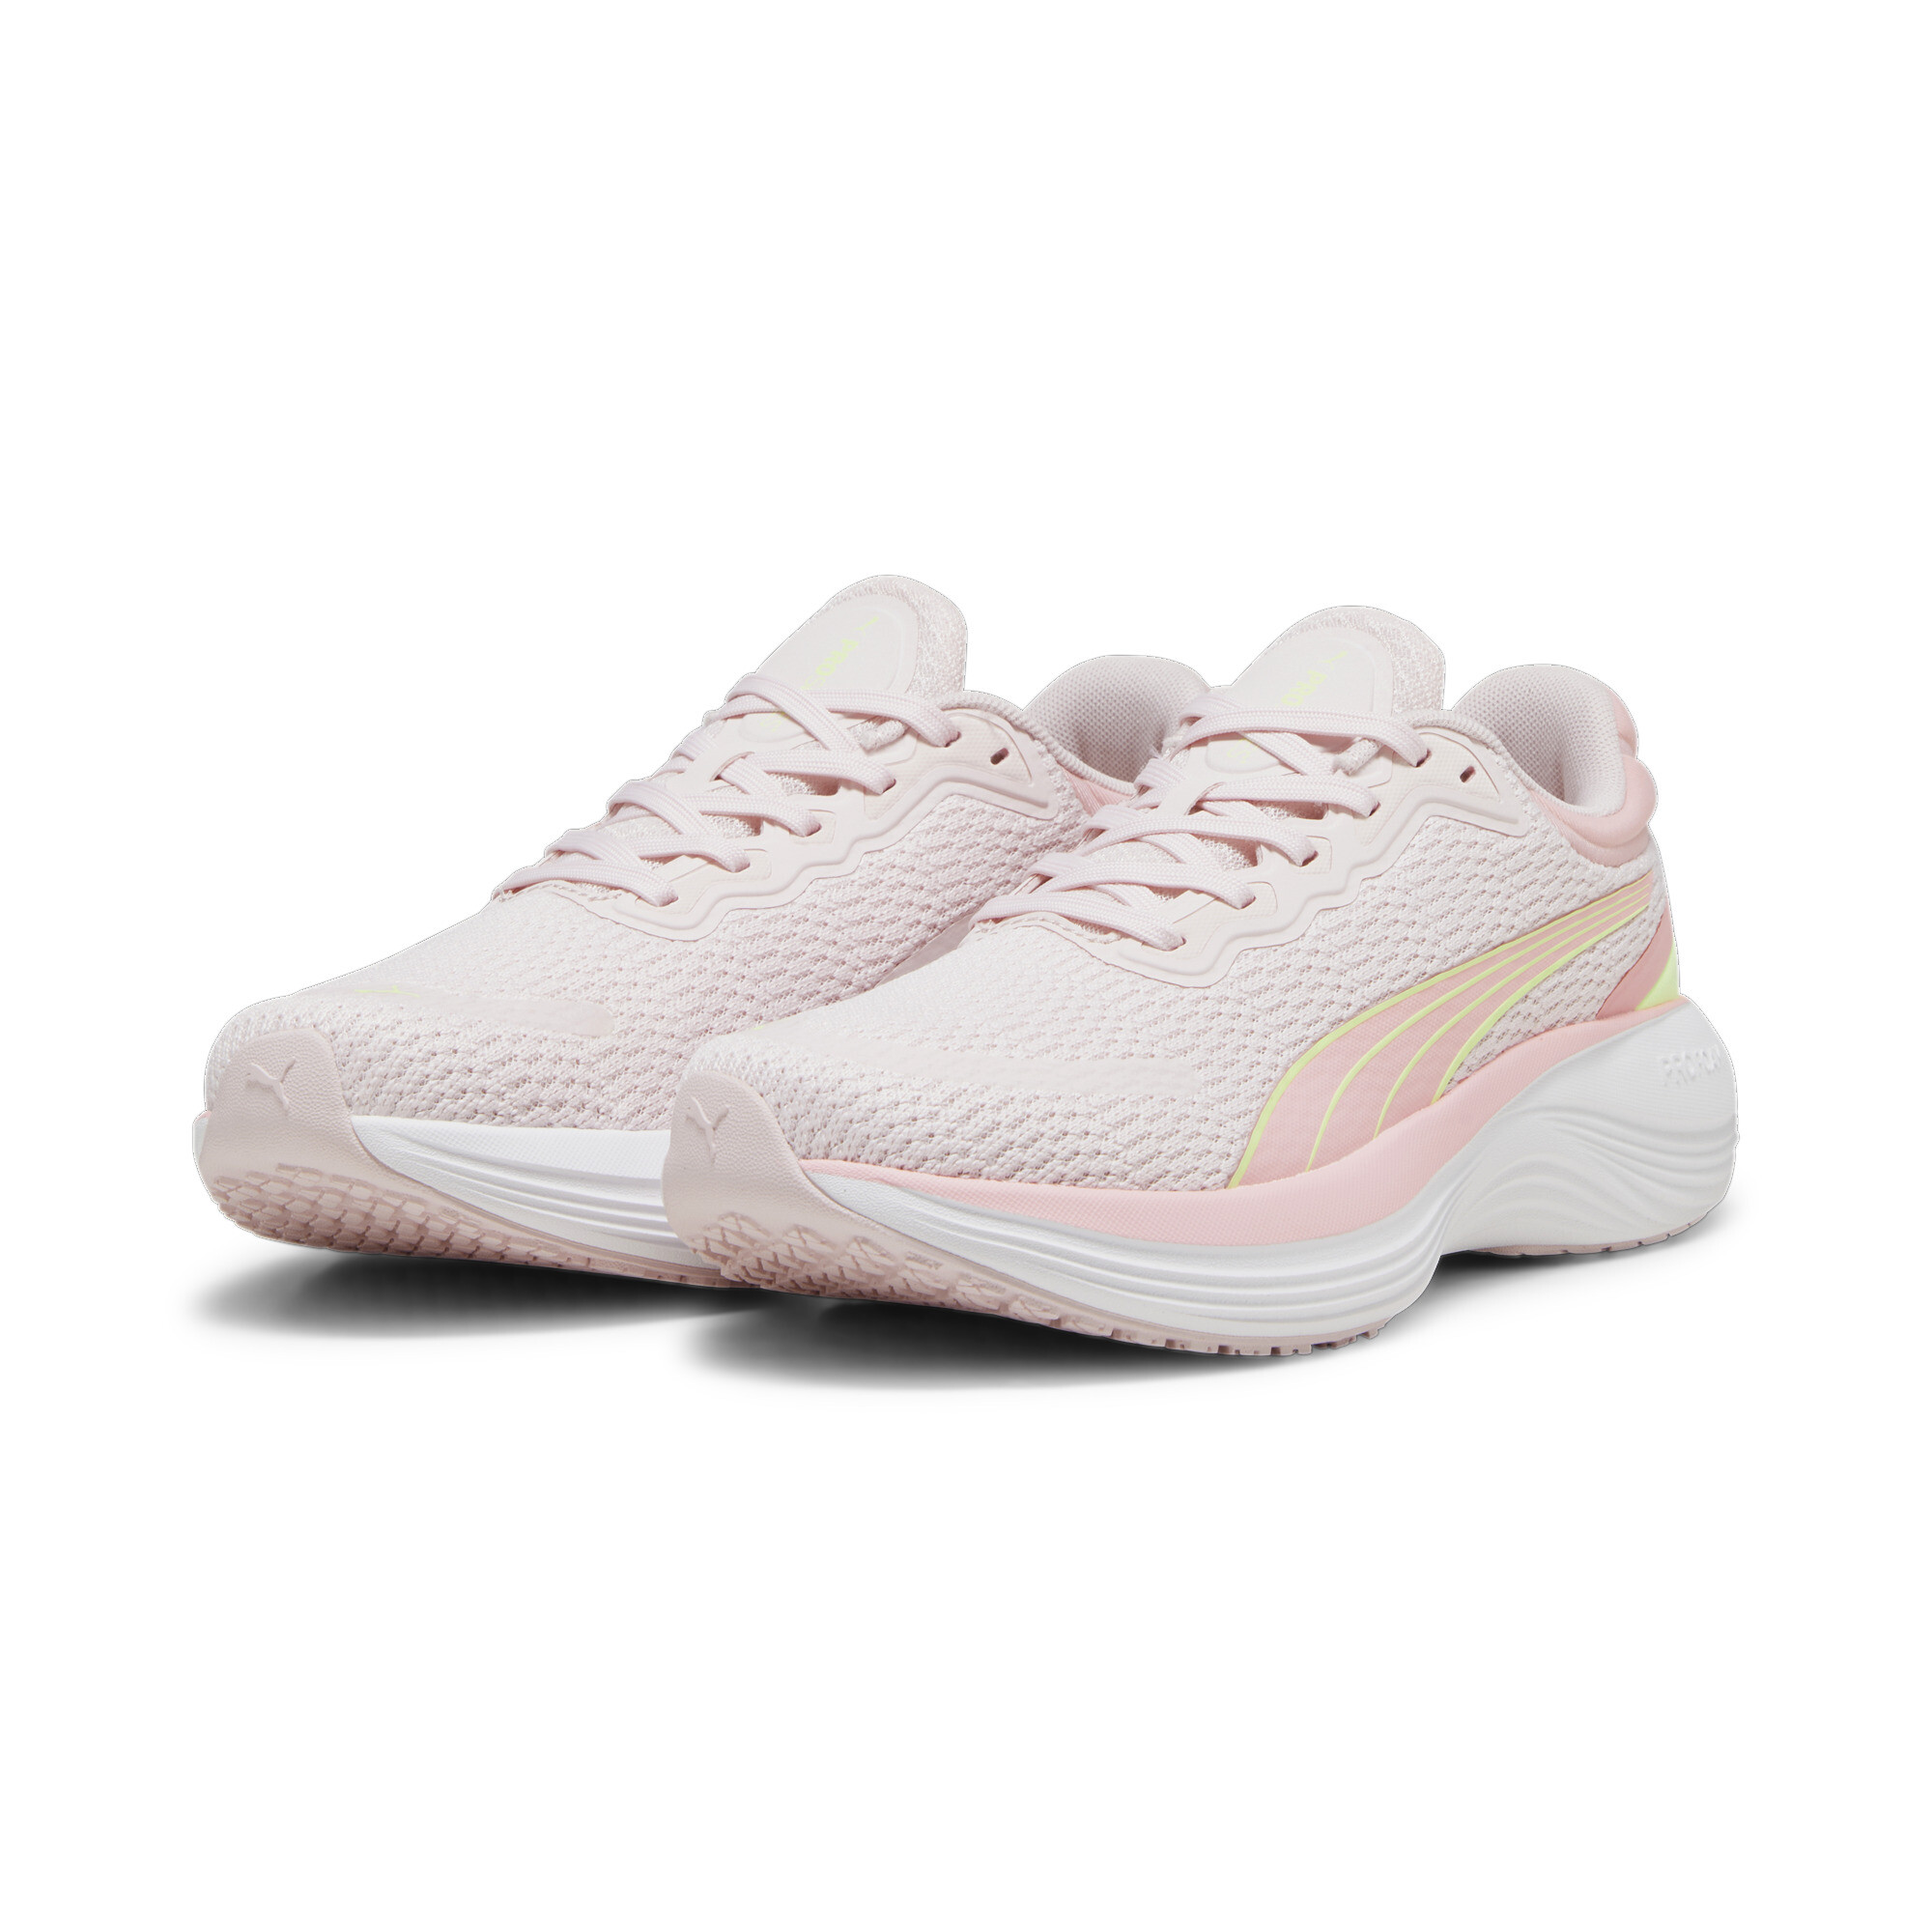 Men's PUMA Scend Pro Running Shoes In Pink, Size EU 38.5